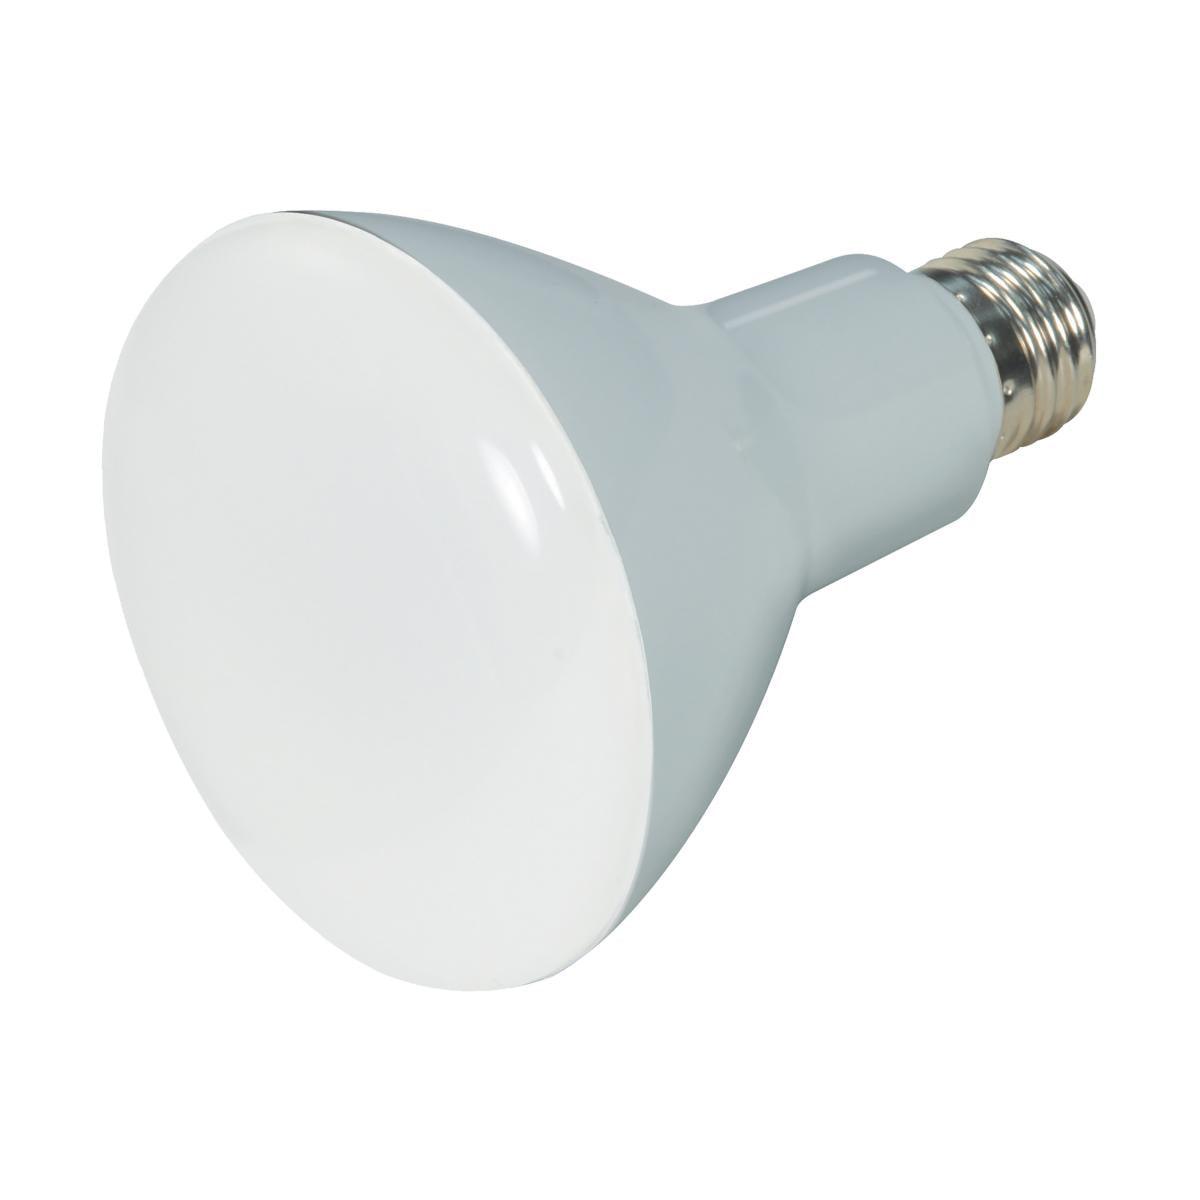 LED R30/BR30 Reflector bulb, 7 watt, 650 Lumens, 3500K, E26 Medium Base, 105 Deg. Flood - Bees Lighting